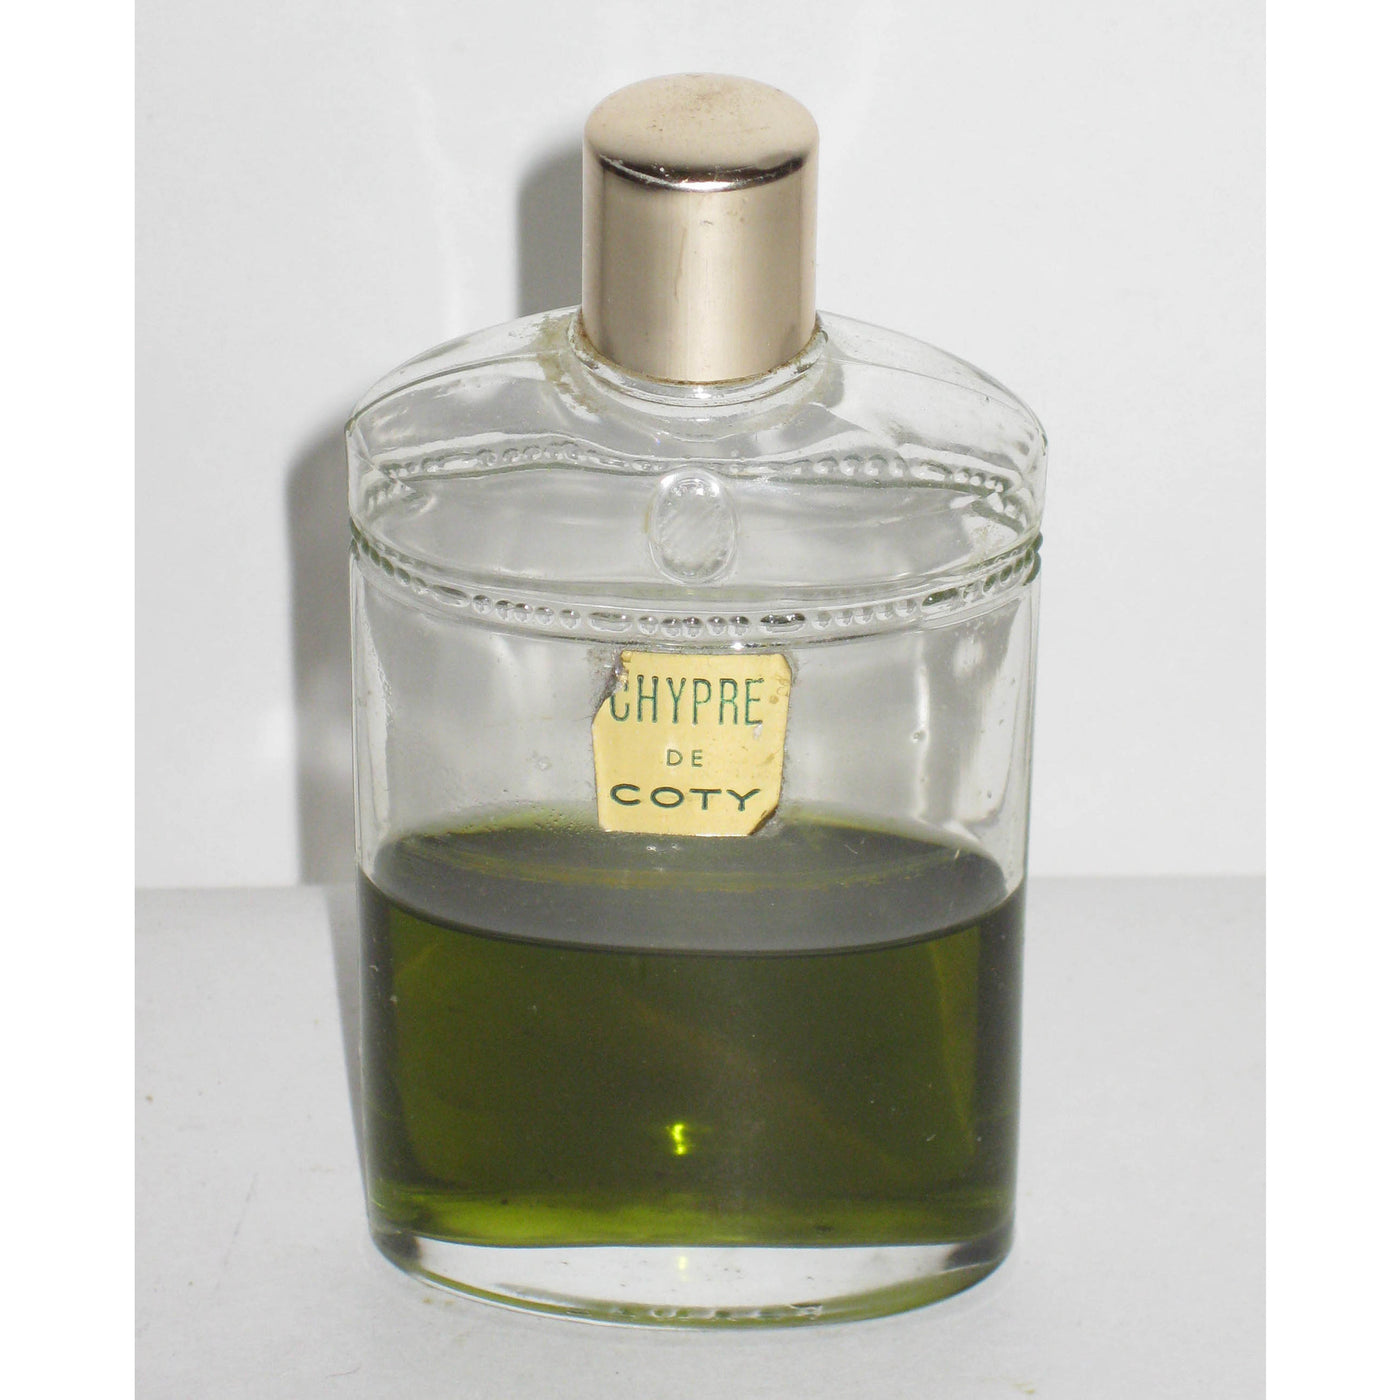 Vintage Coty Chypre Perfume